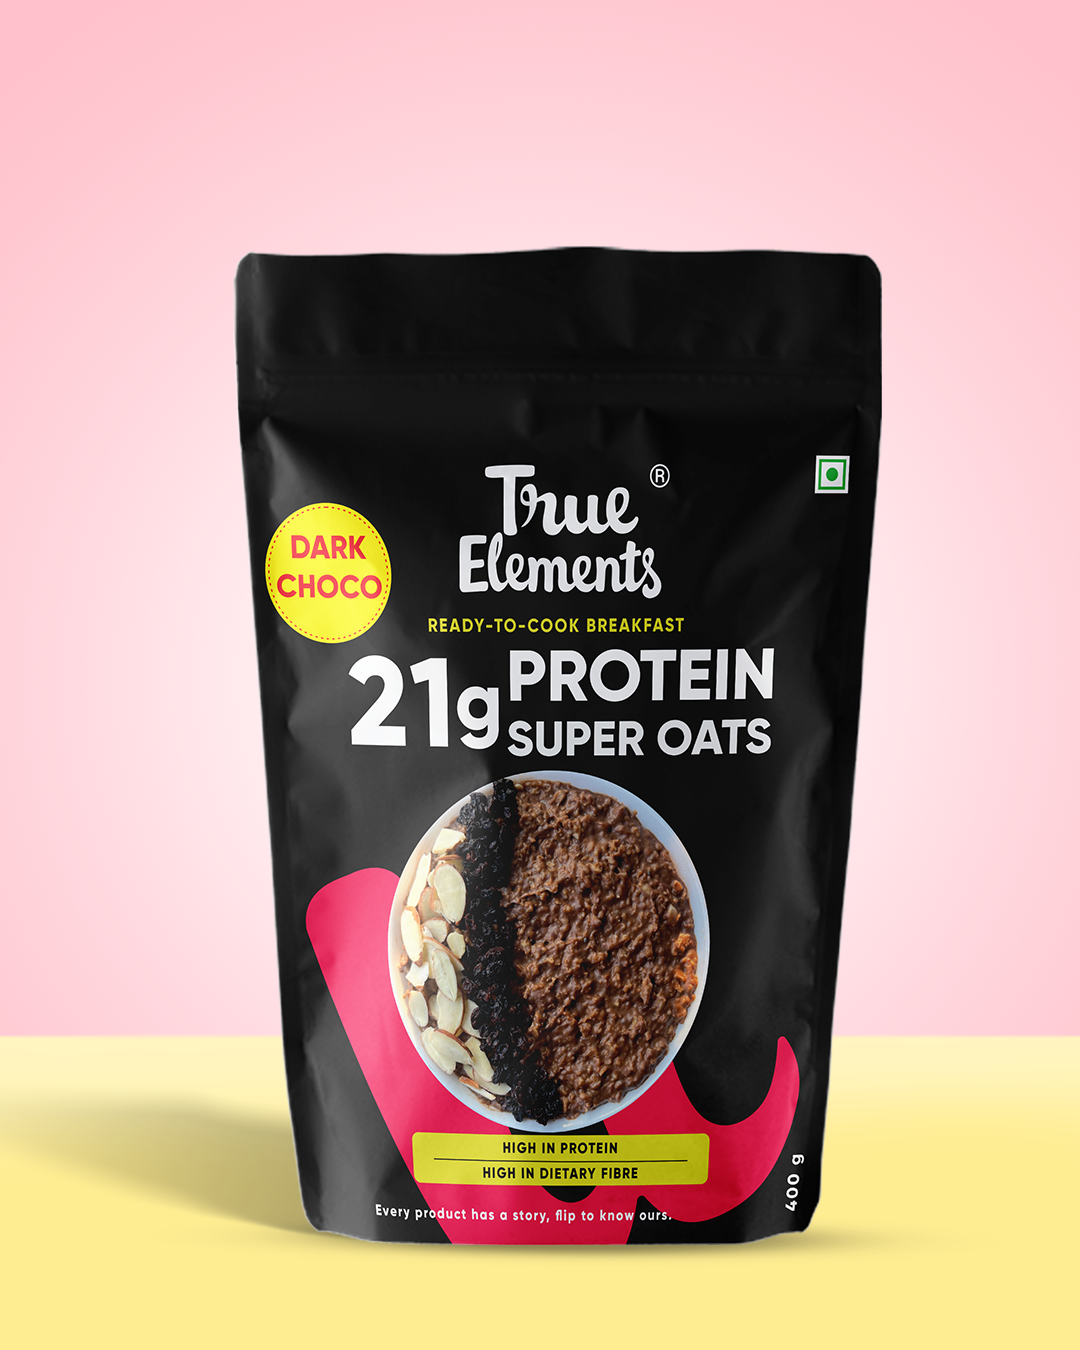 Buy Super Oats Dark Chocolate Online - 21g Protein